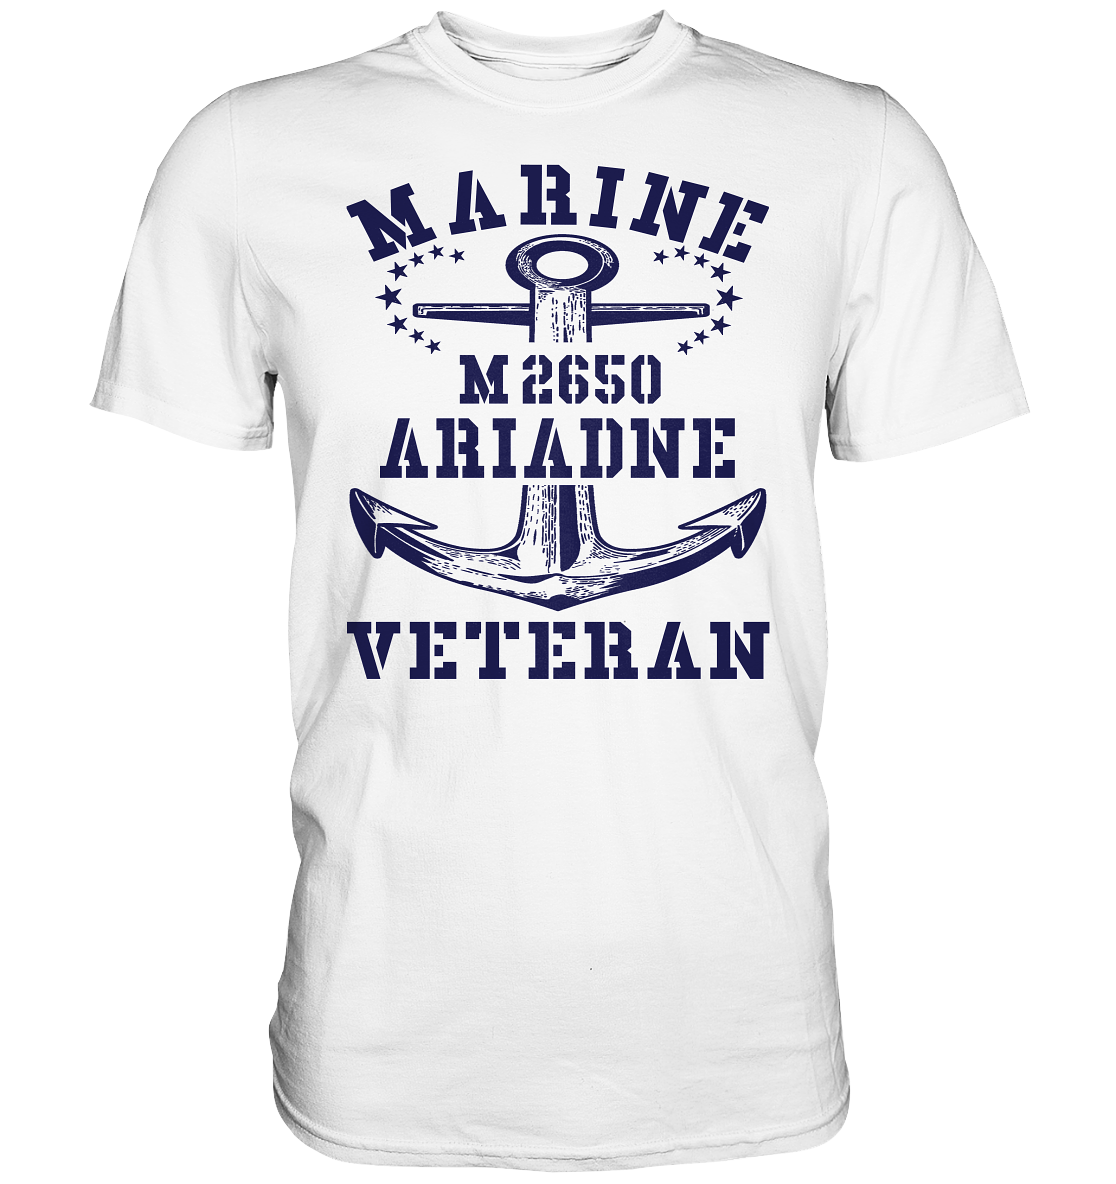 BiMi M2650 ARIADNE Marine Veteran - Premium Shirt